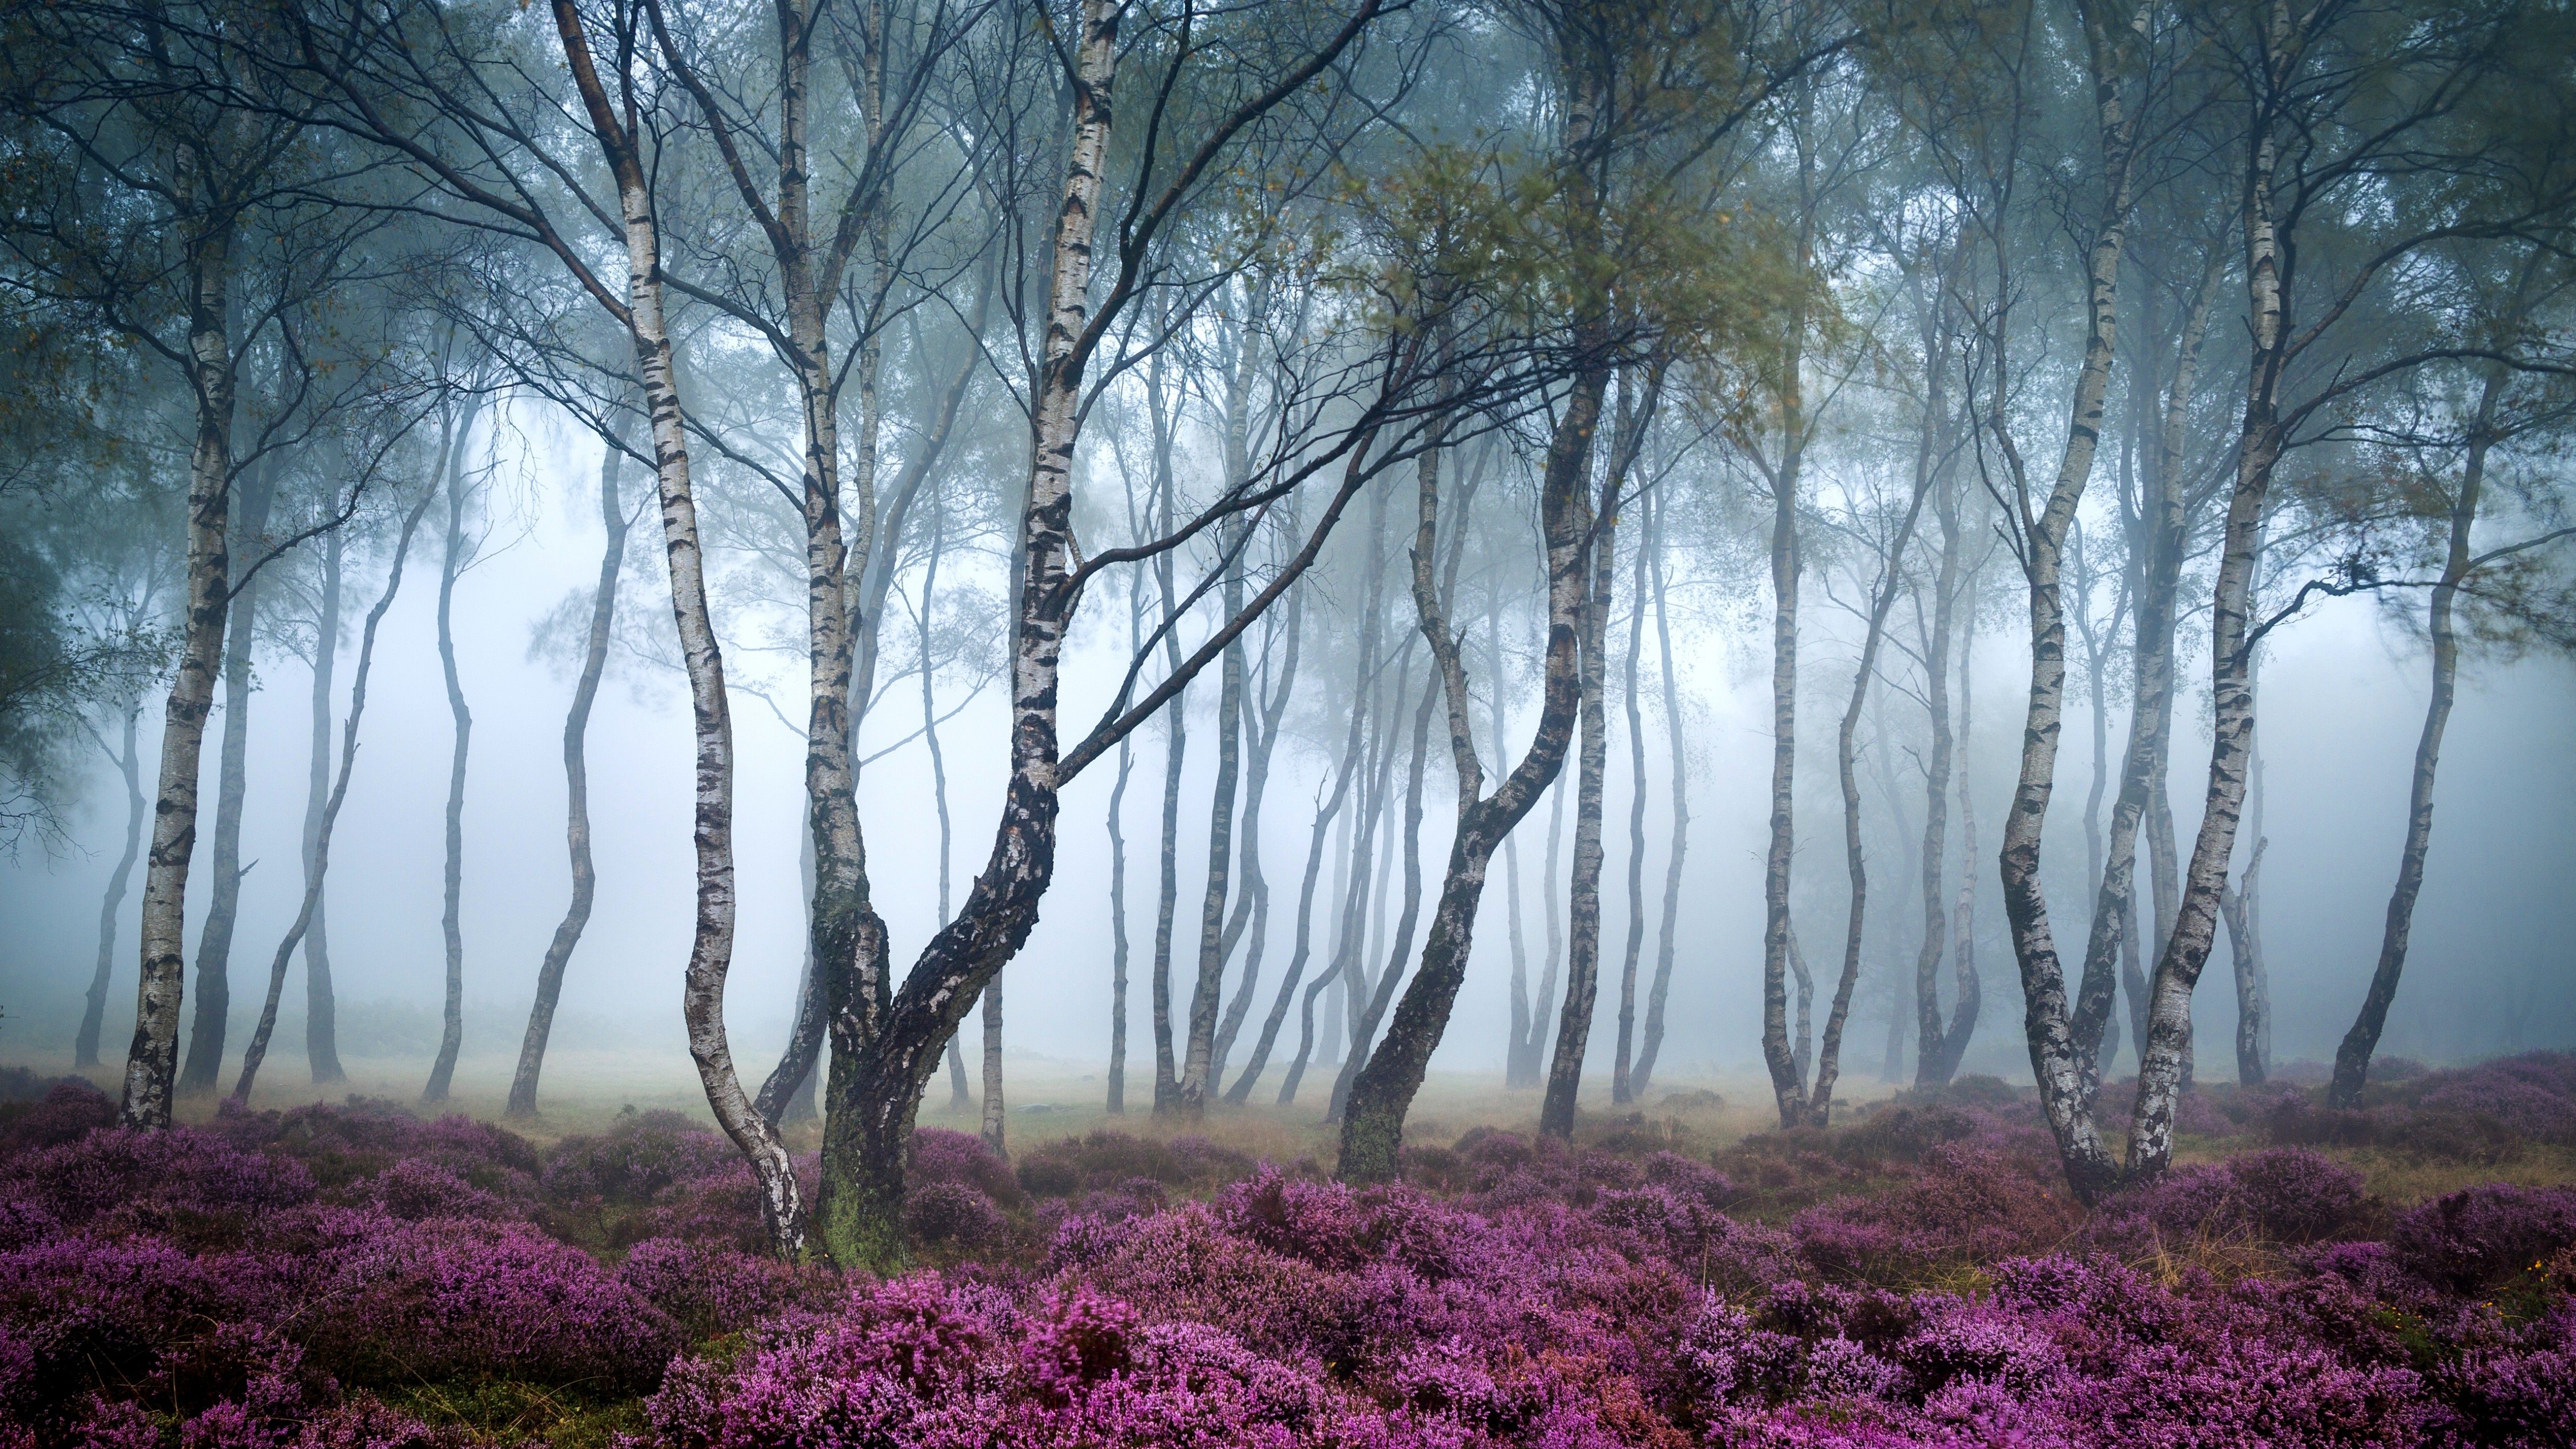 Wallpaper Stanton Moor, 5k, 4k wallpaper, 8k, Peak District, UK, Forest, wildflowers, fog, Nature